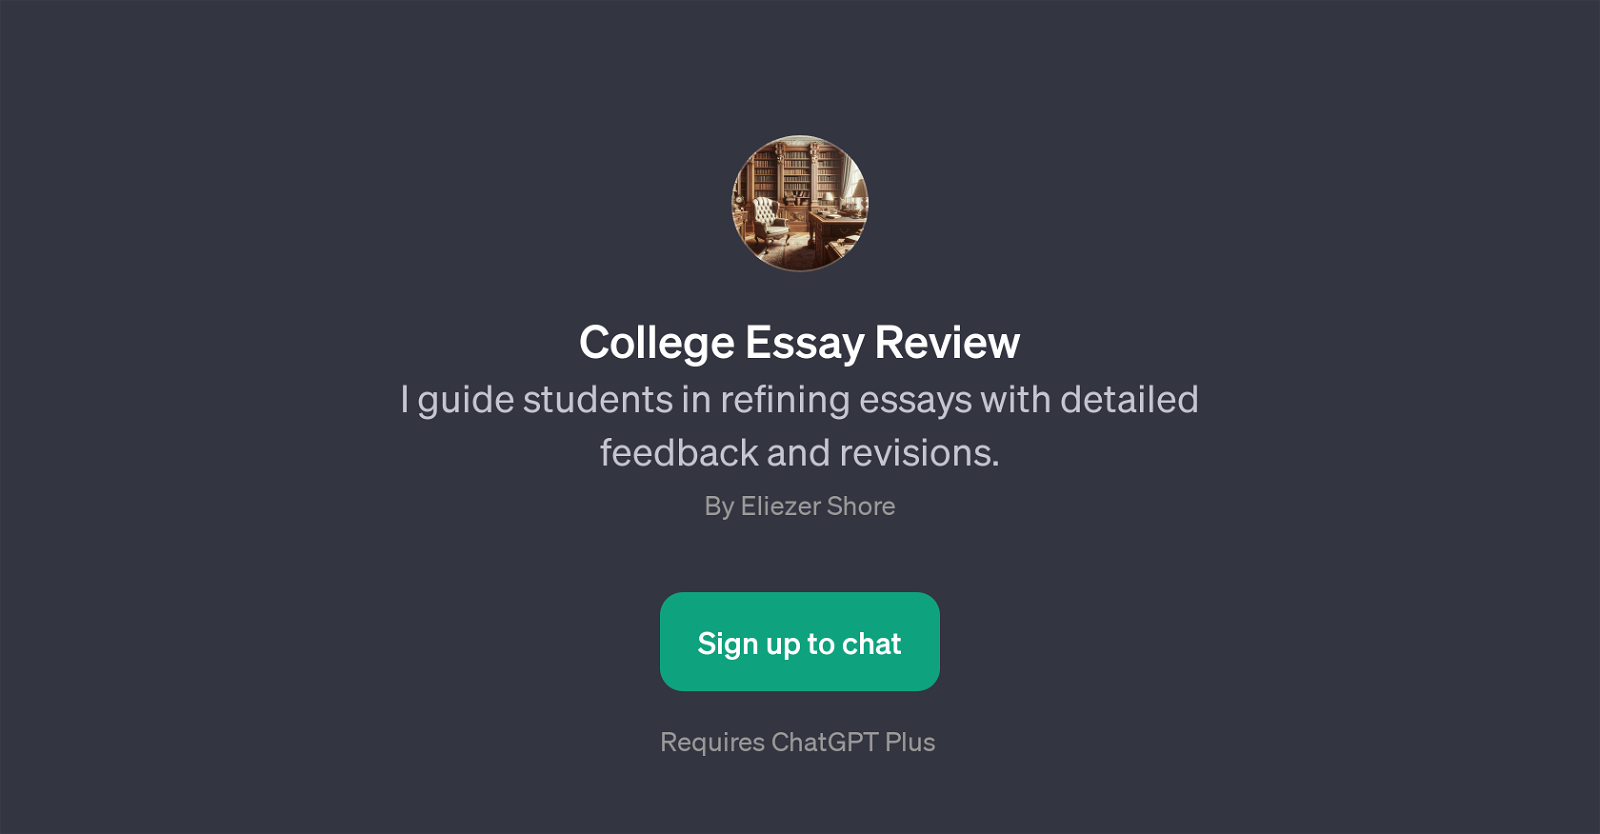 College Essay Review website